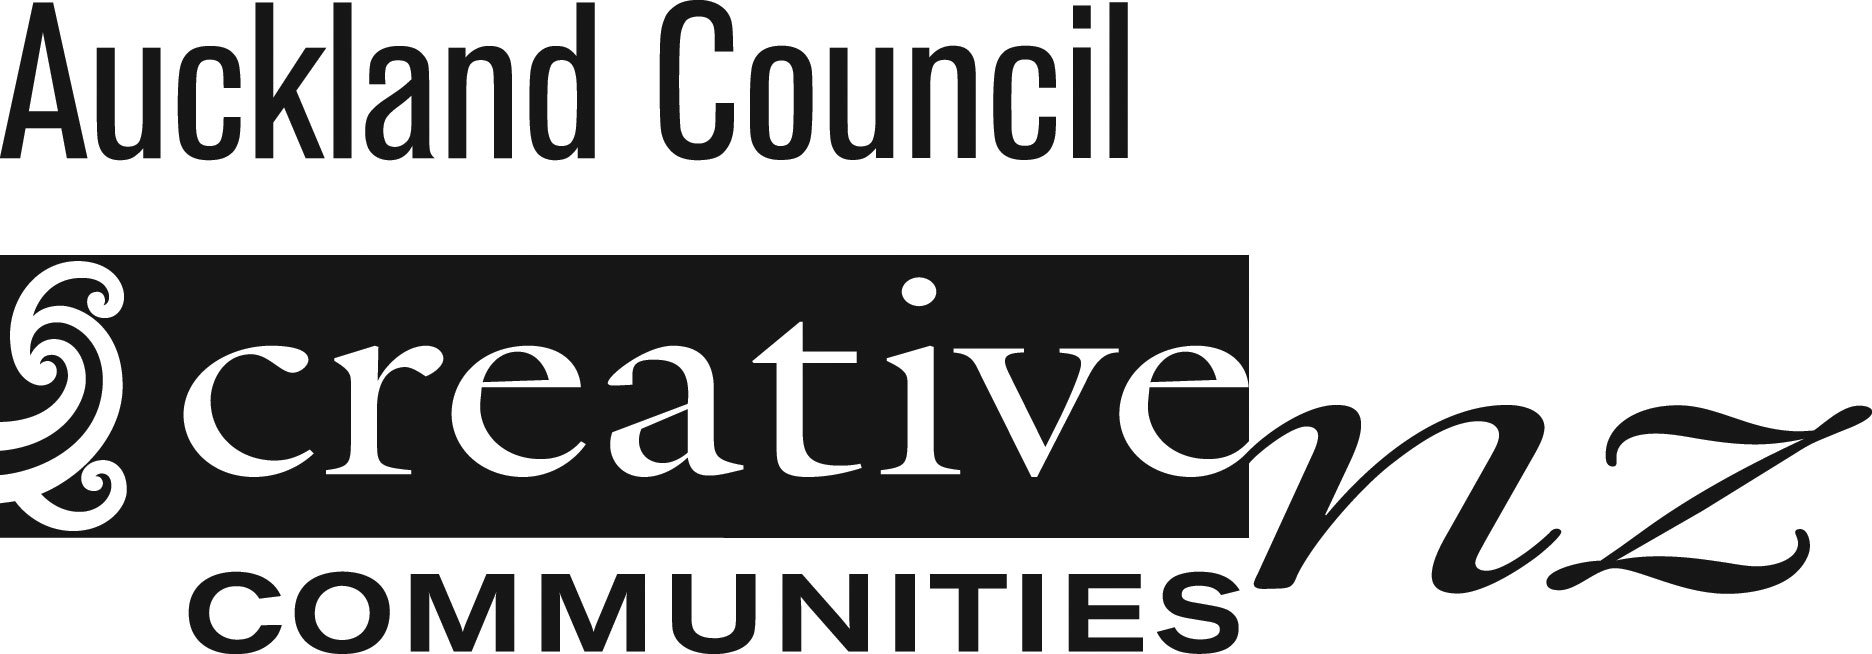 Auckland Council Creative Communities Scheme